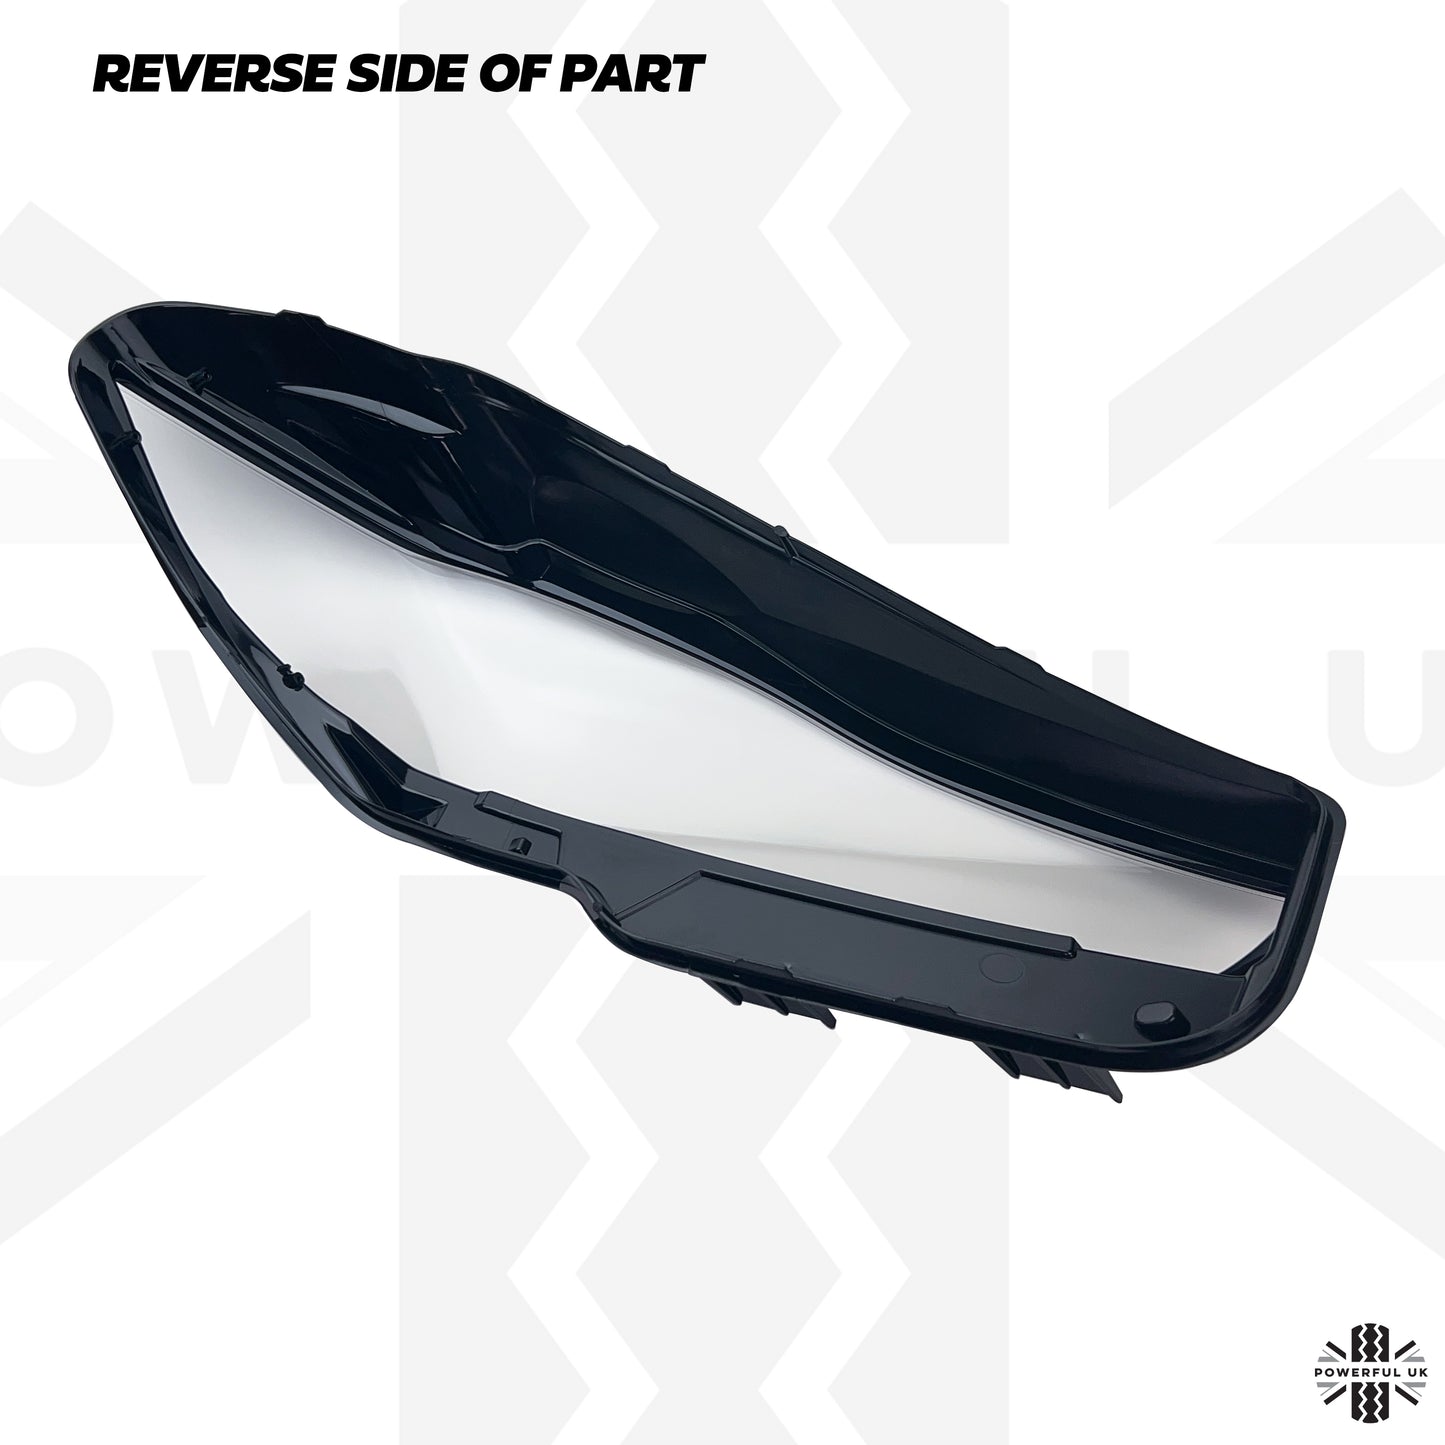 Replacement Headlight Lens for Jaguar XE 2015-19 - LH